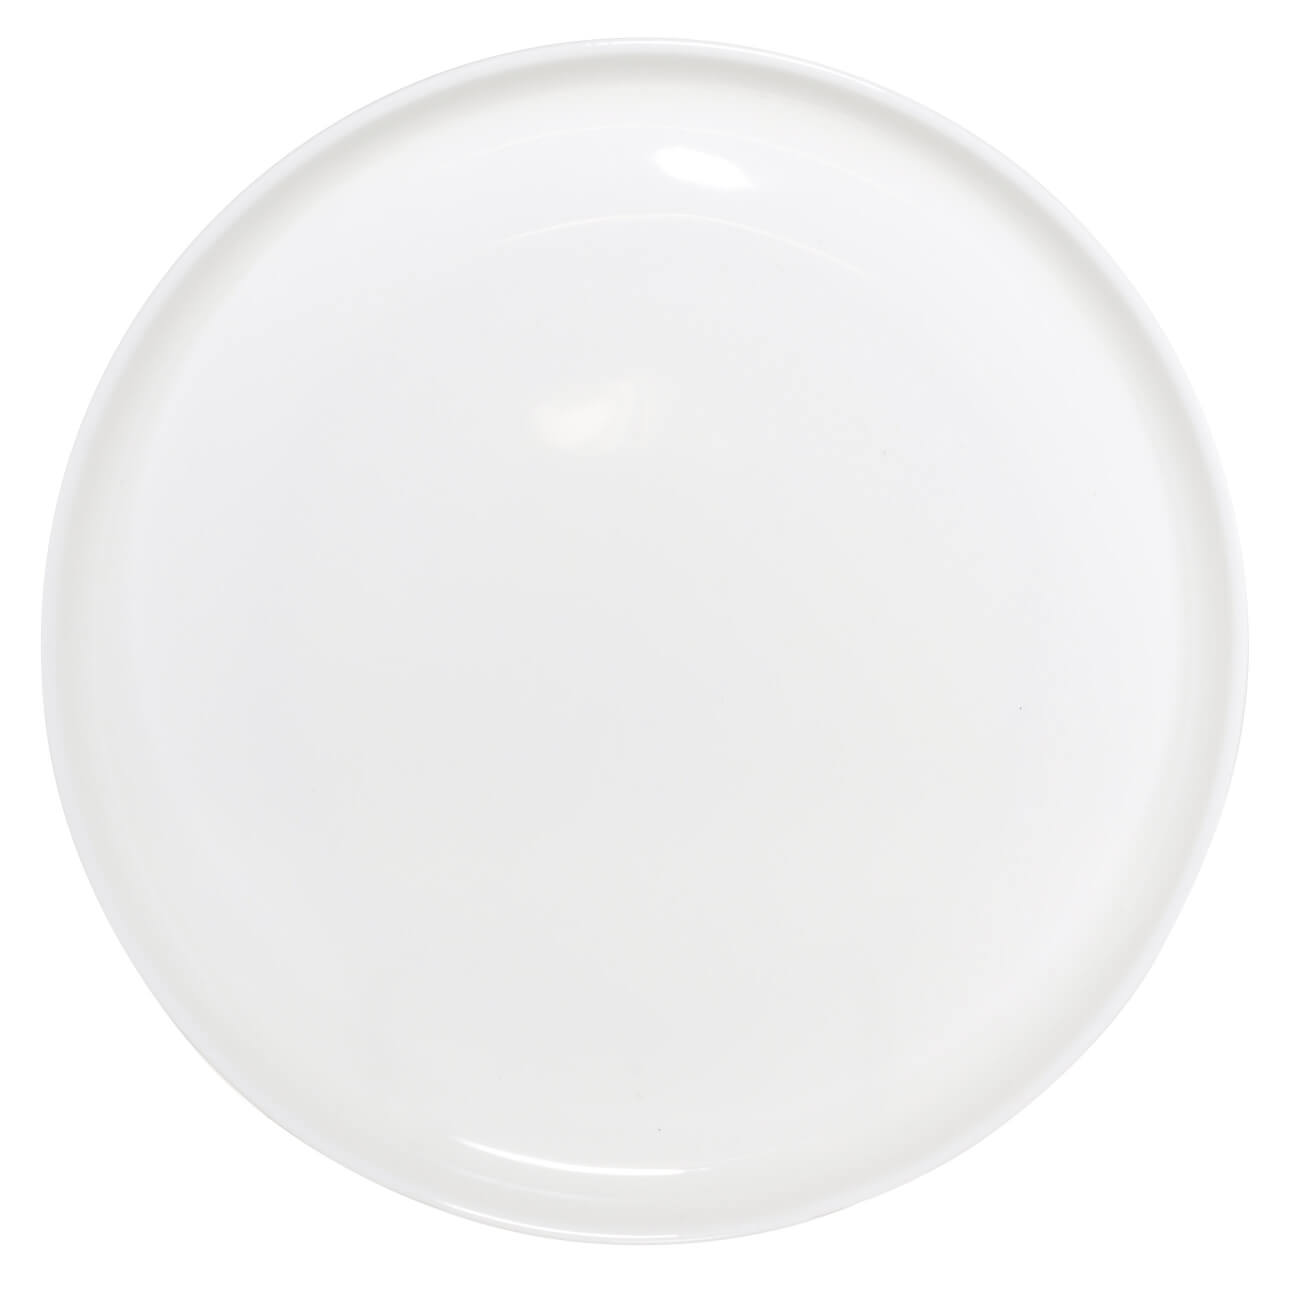 Тарелка обеденная, 26 см, фарфор F, белая, Ideal white тарелка обеденная стеклокерамика 20 5 см фигурная вайт rlp80x белая